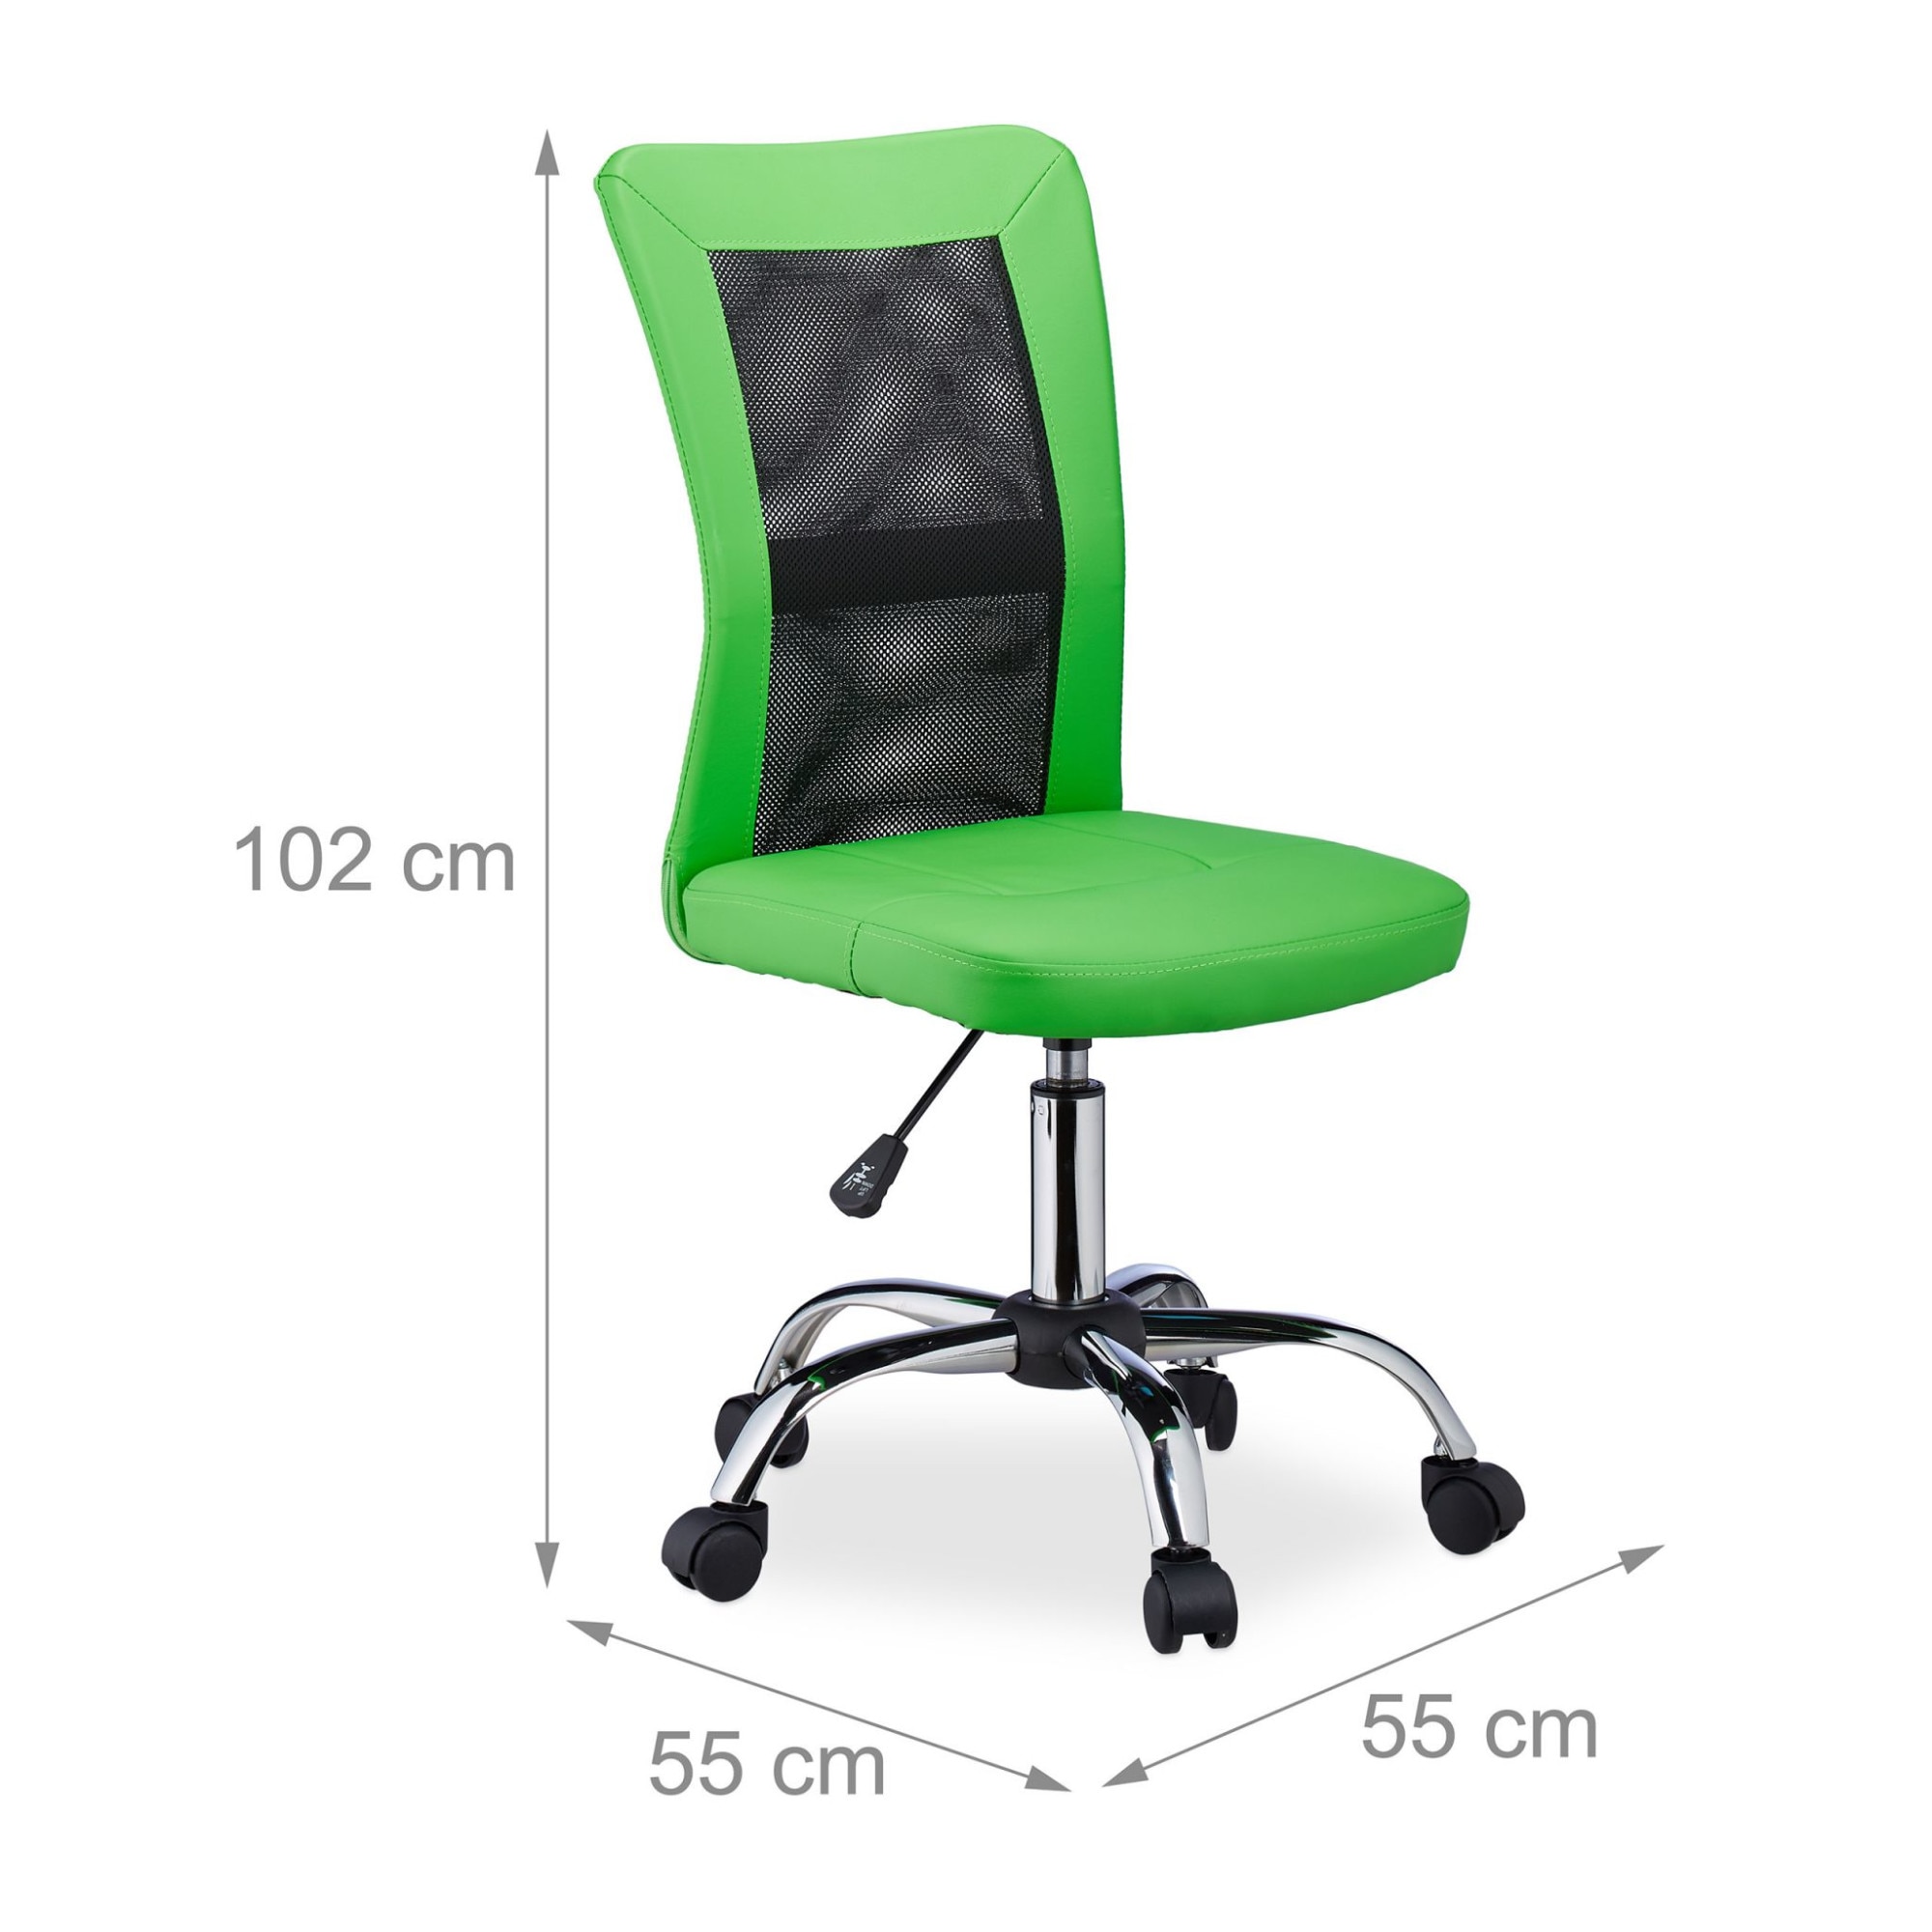 Be careful husband bound Scaun de birou ergonomic, confortabil si modern, verde/negru, Relaxdays -  eMAG.ro